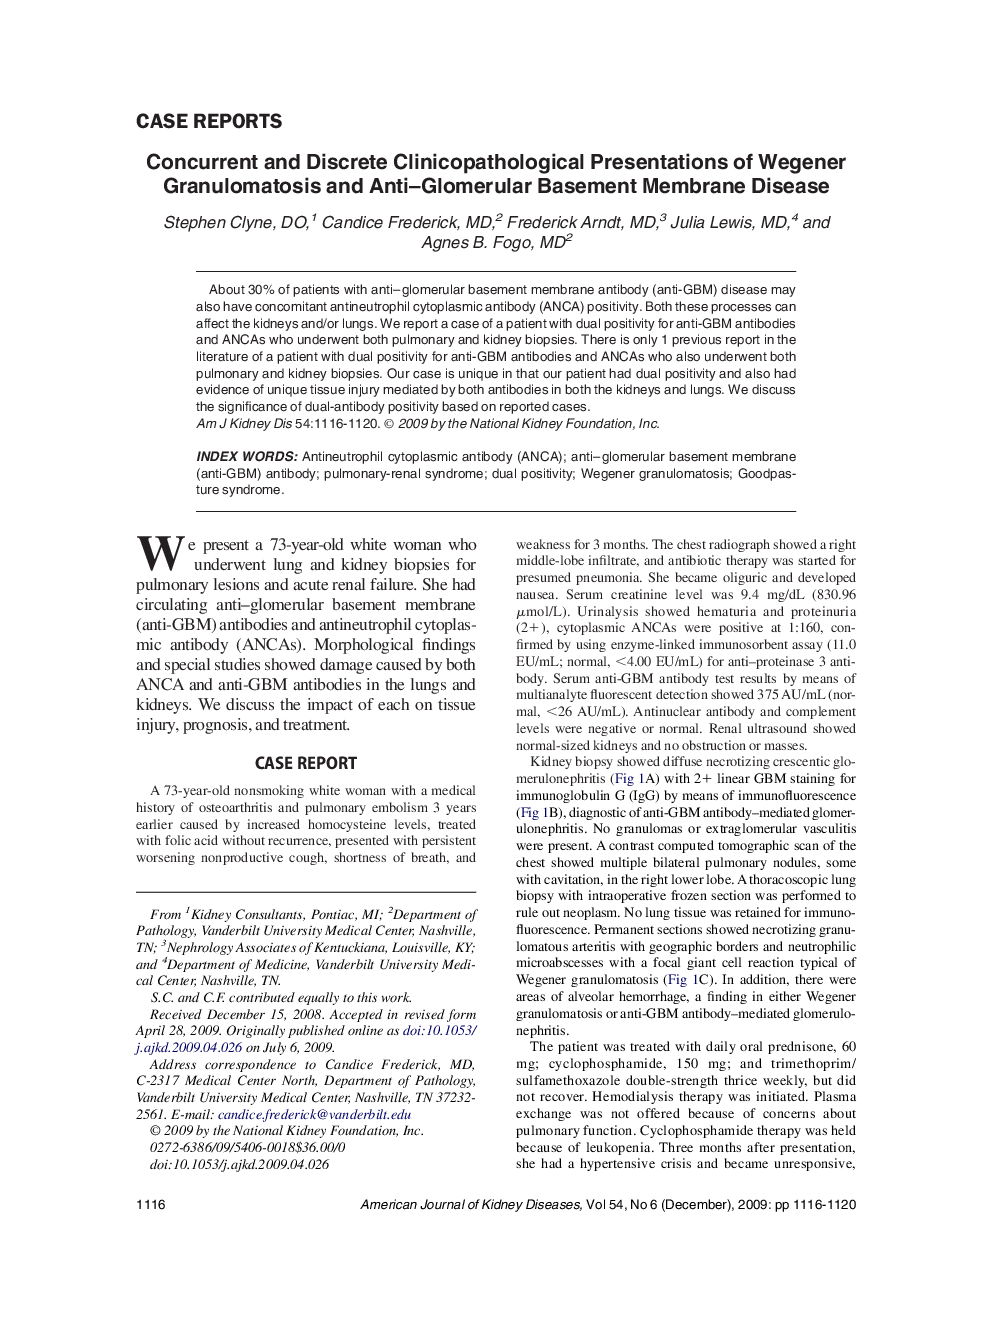 Concurrent and Discrete Clinicopathological Presentations of Wegener Granulomatosis and Anti-Glomerular Basement Membrane Disease